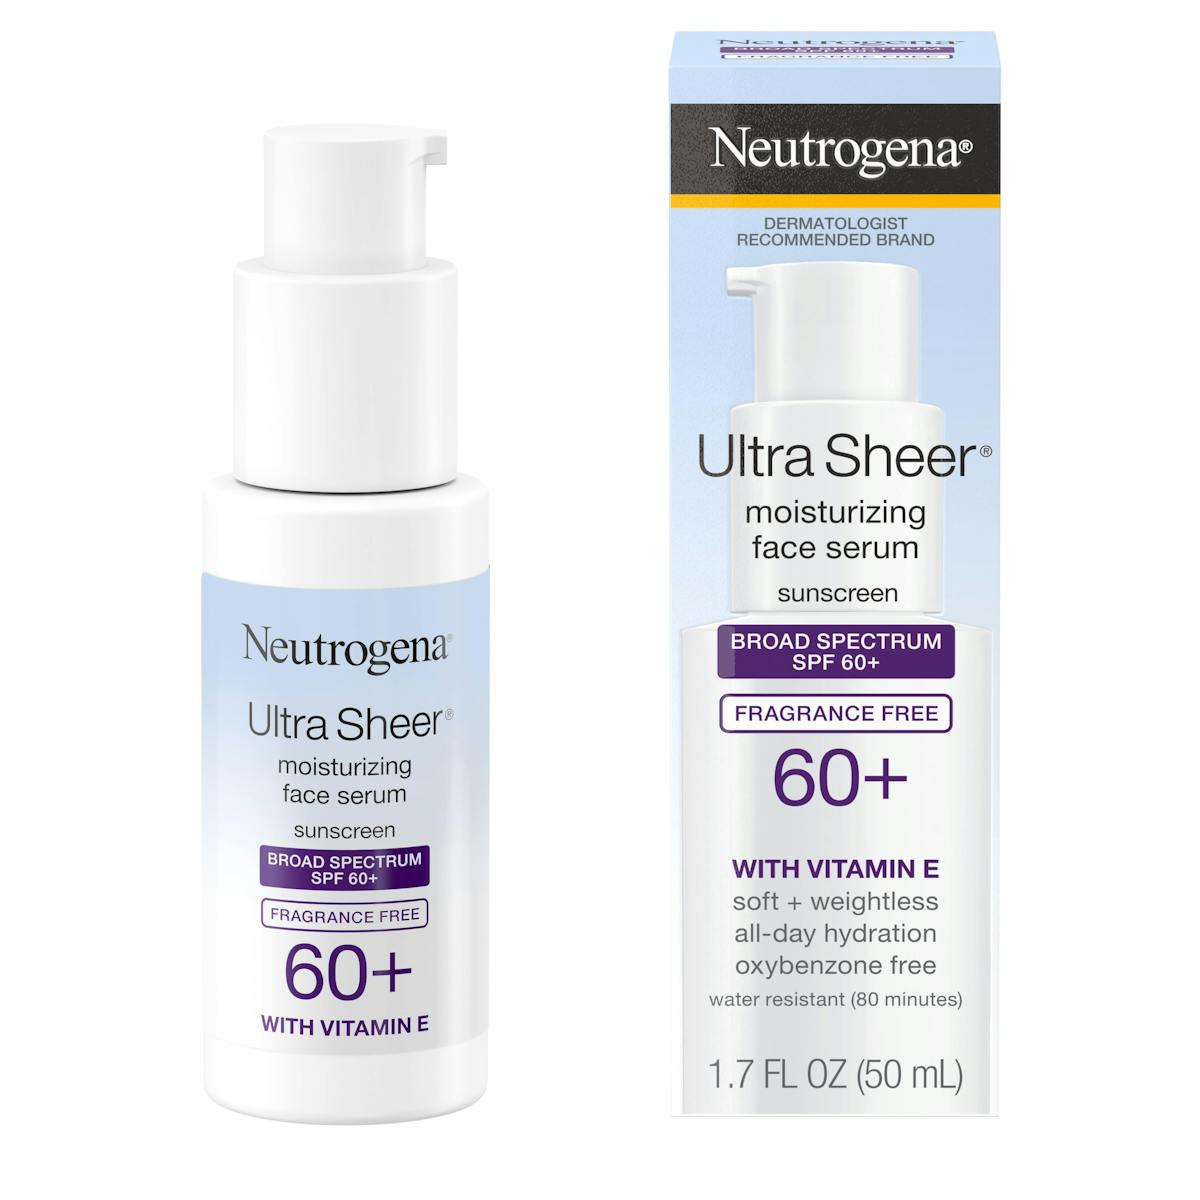 GRWM using Neutrogena ultra sheer face serum spf 60+, Fragrance free